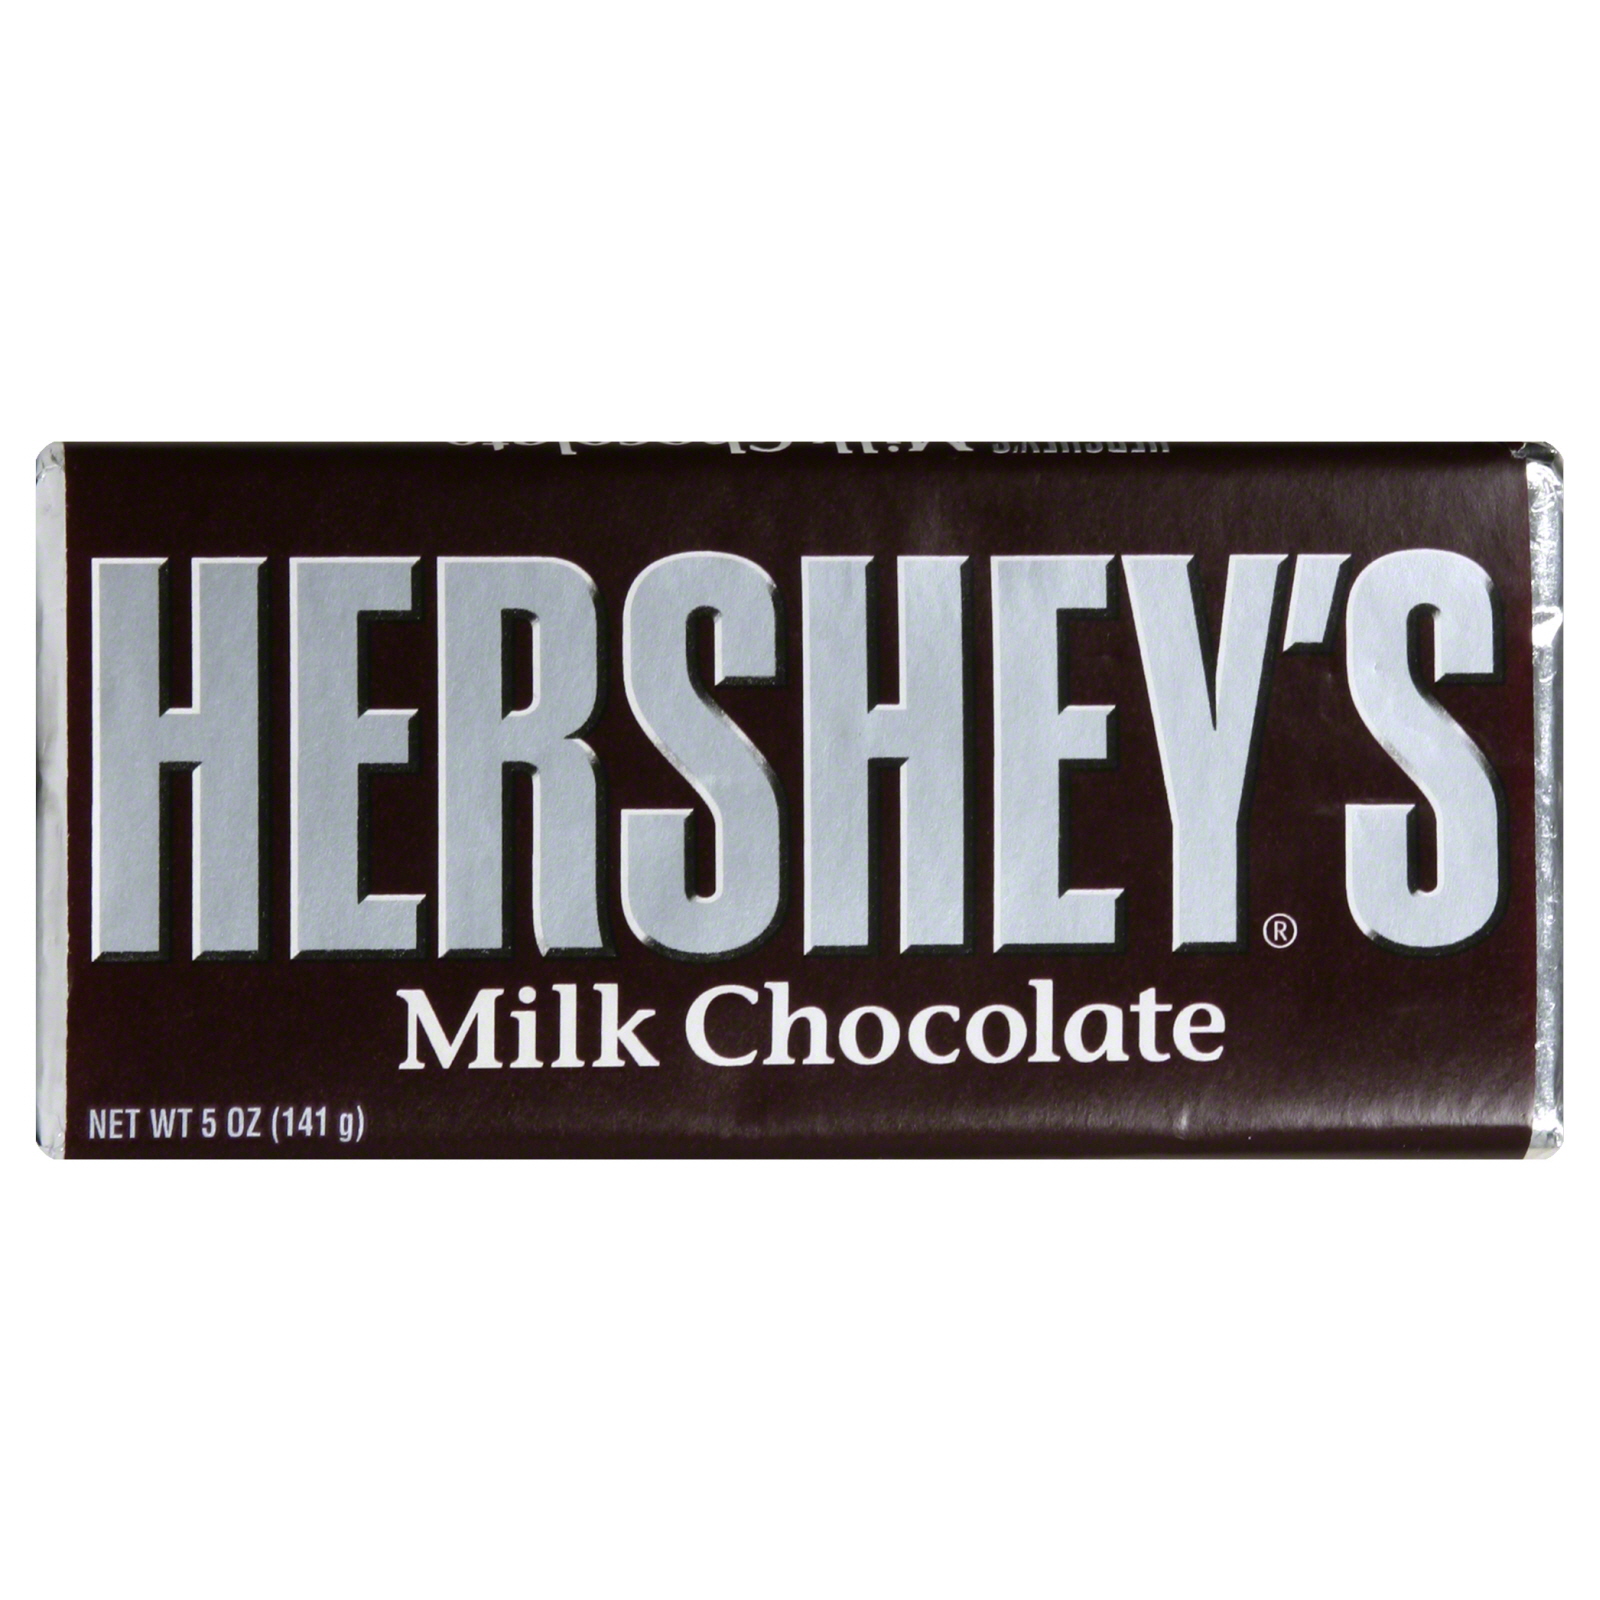 Hershey's Milk Chocolate 5 oz